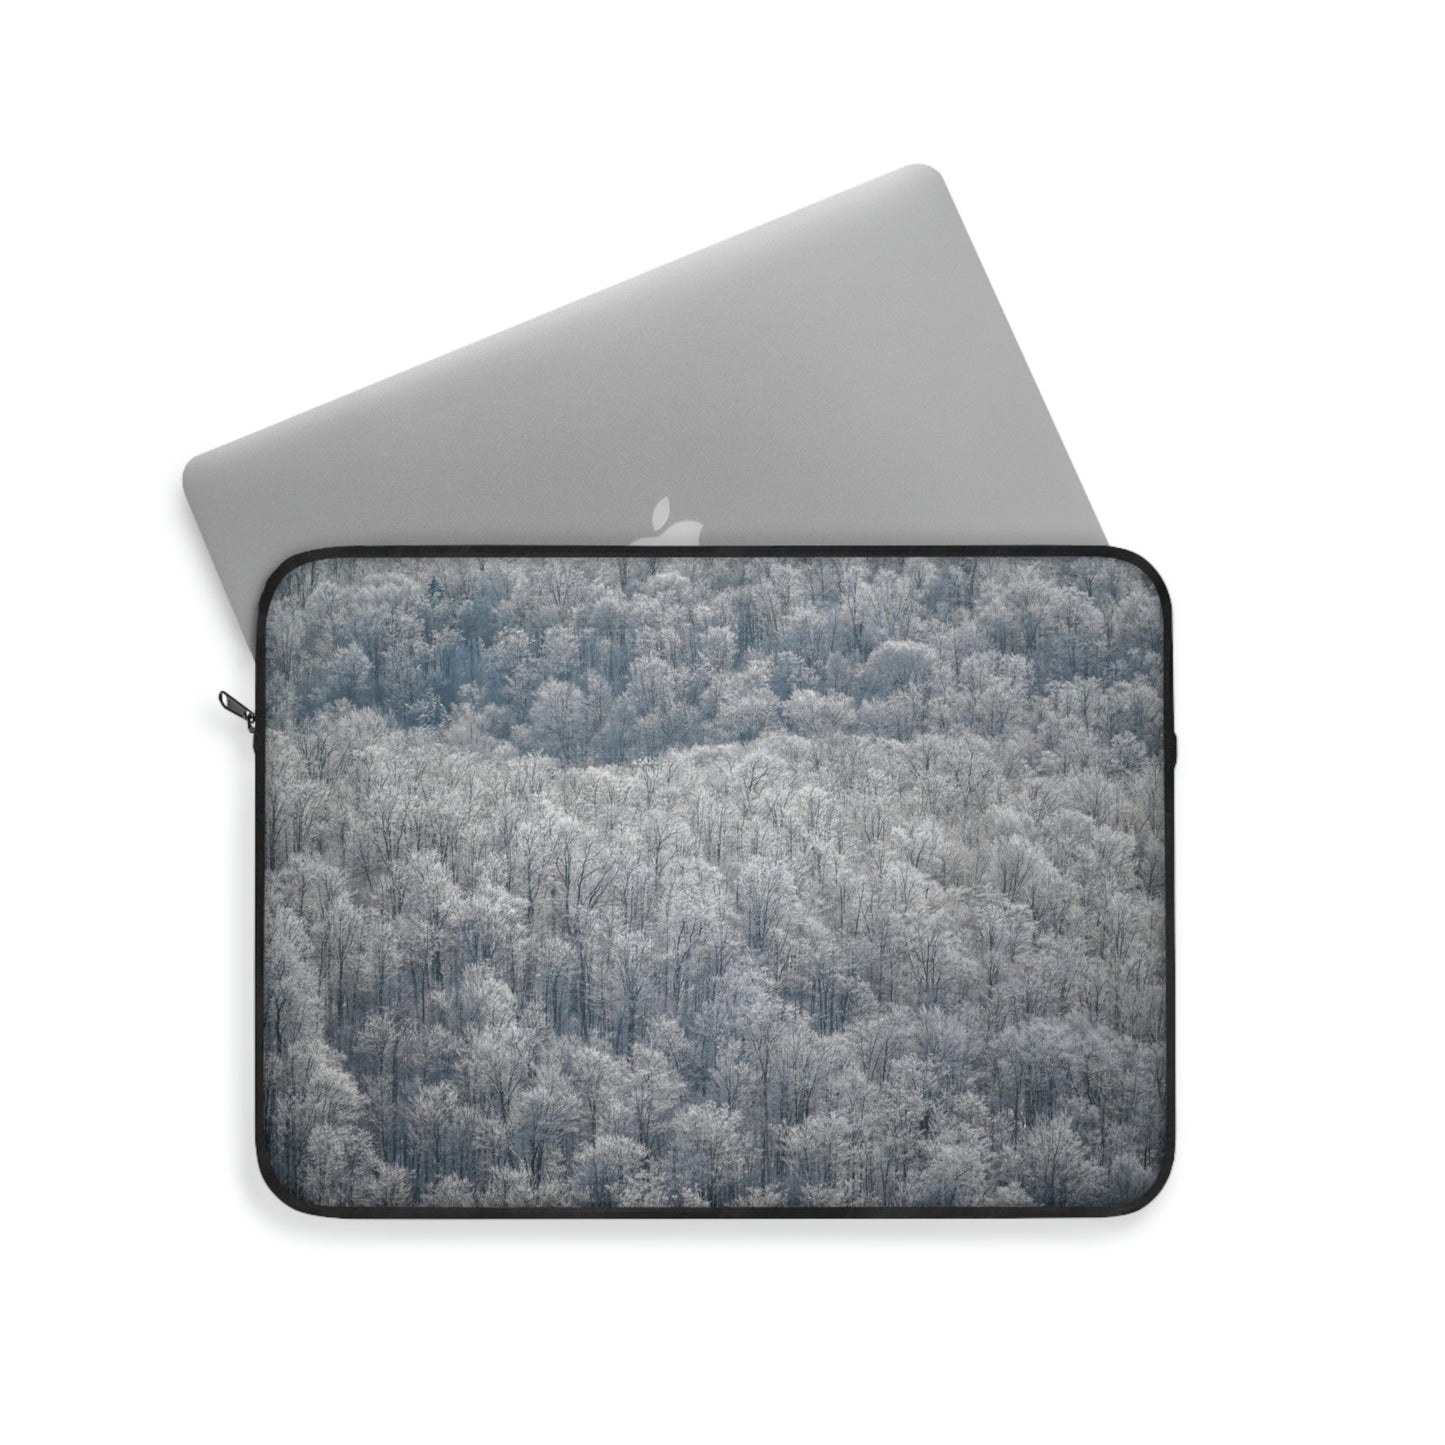 Laptop Sleeve - Frozen trees